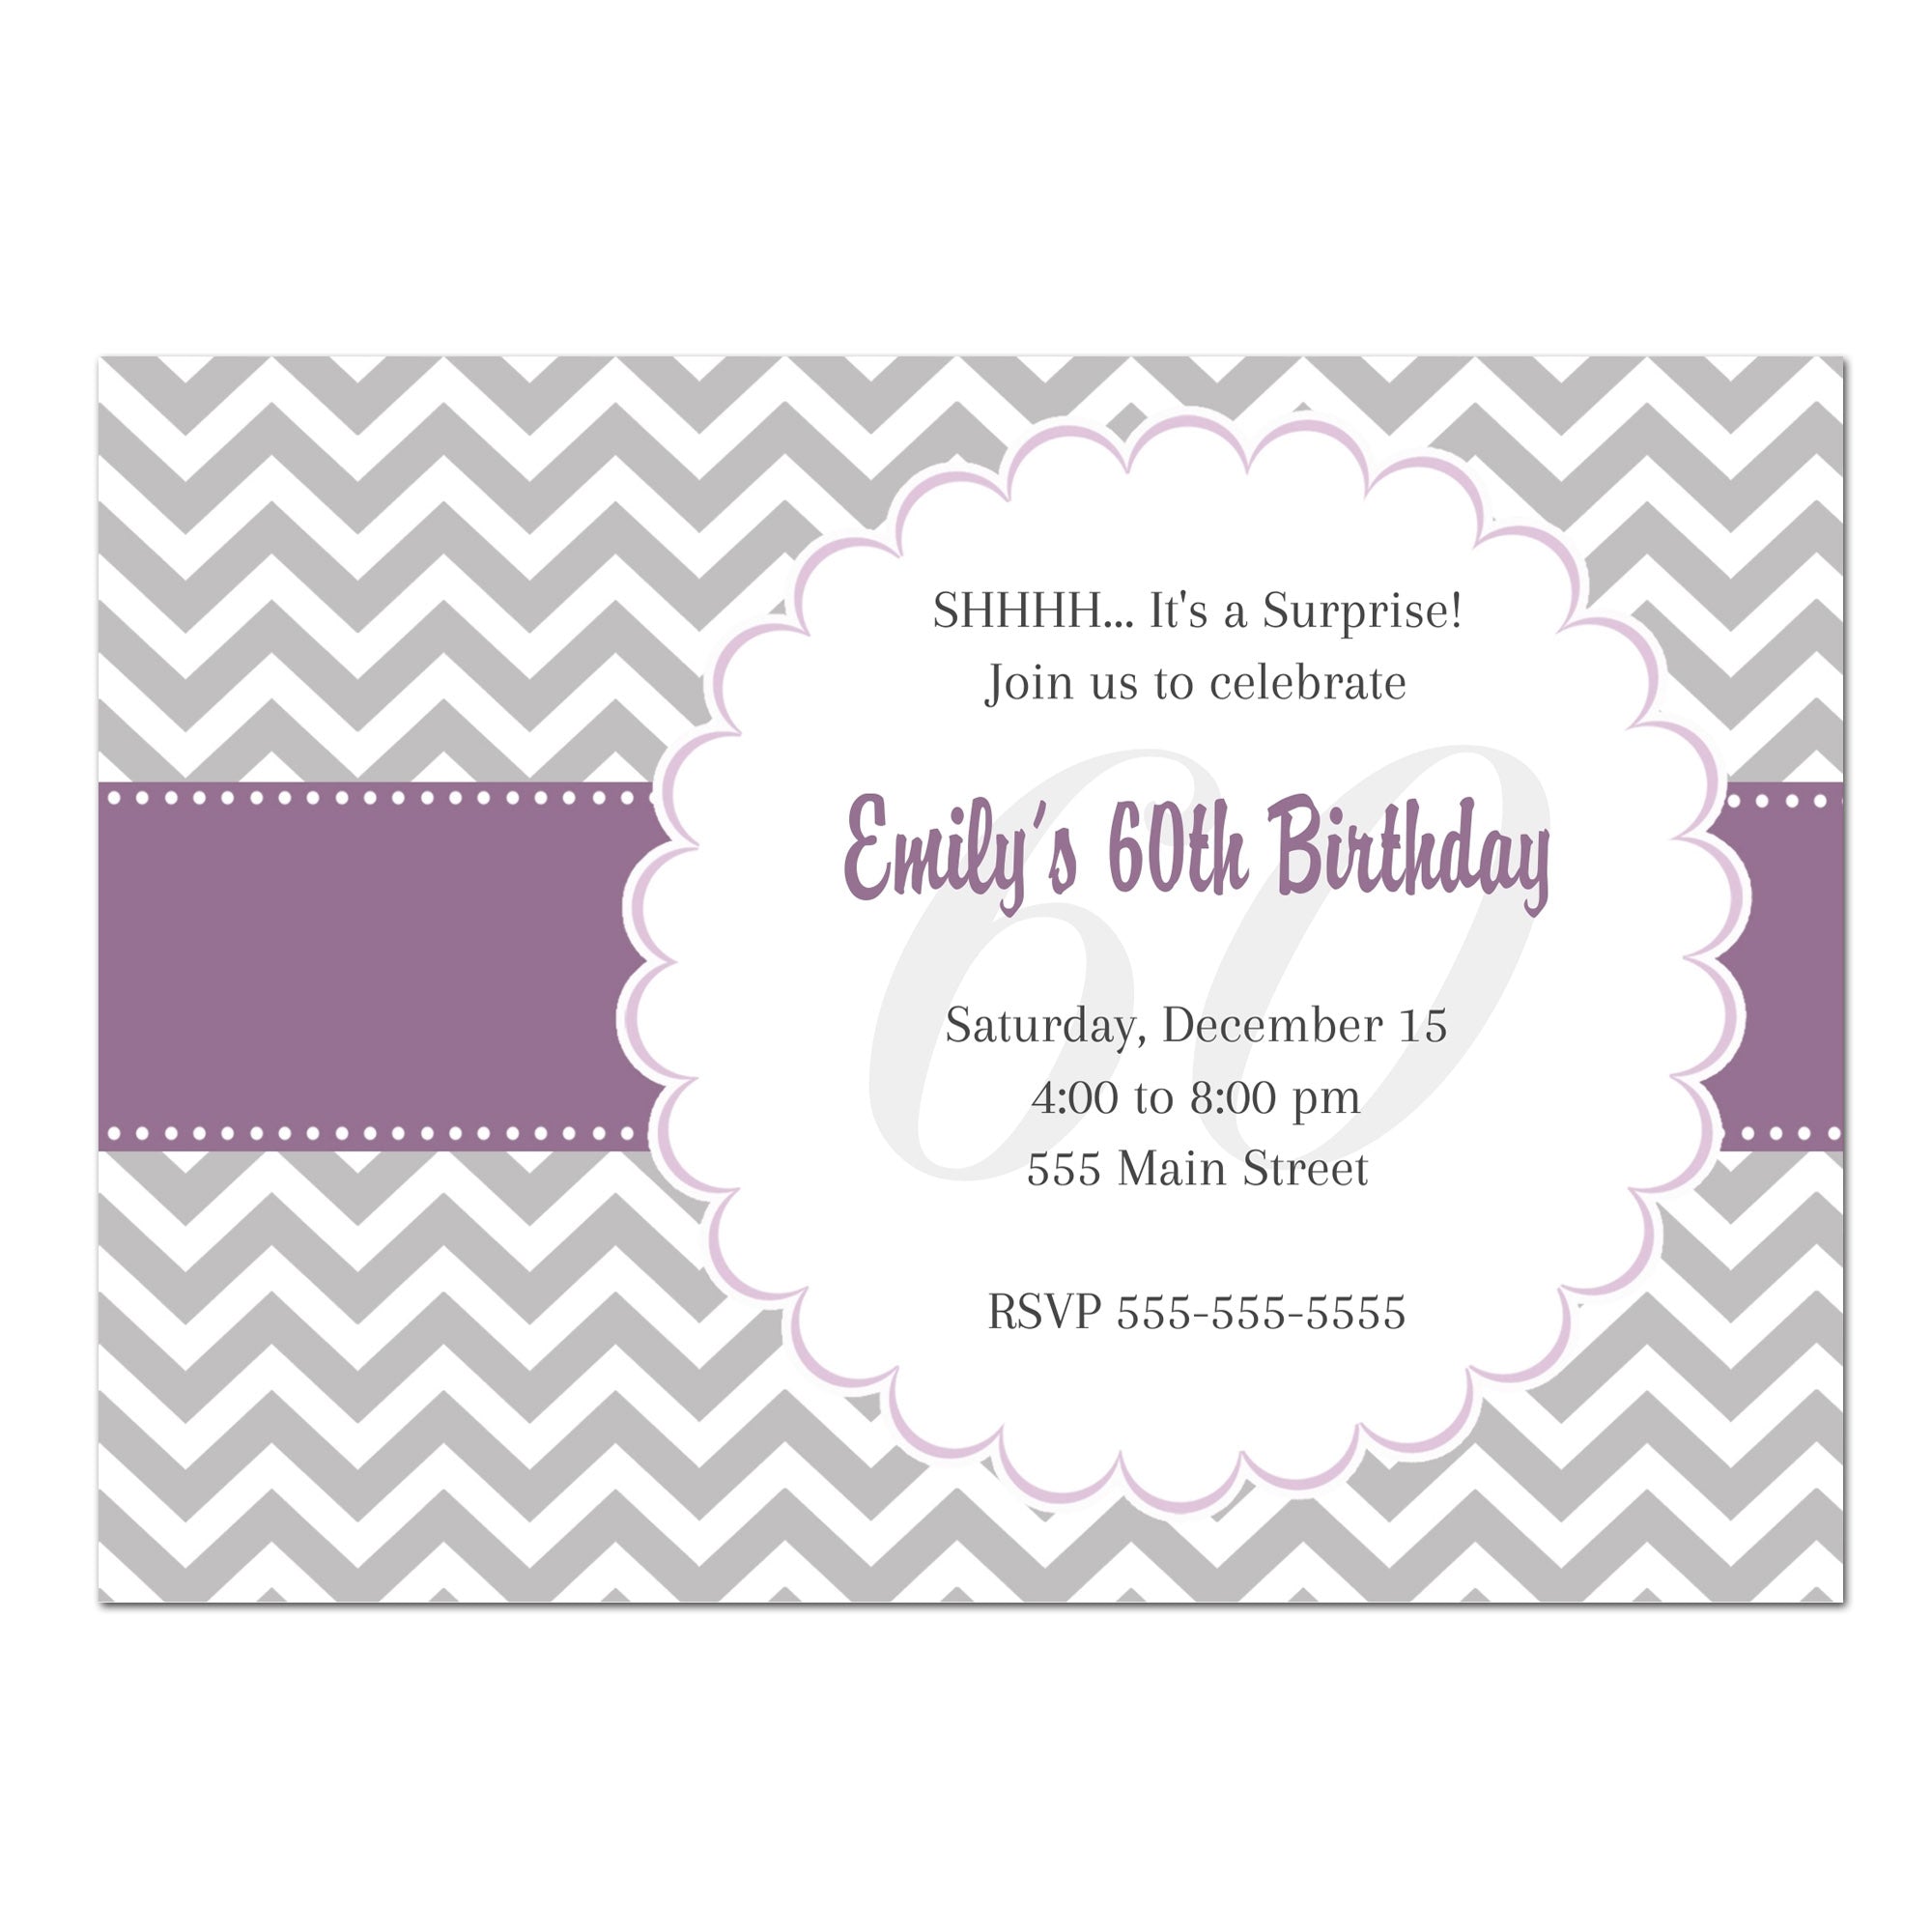 Adult birthday invitation silver printable